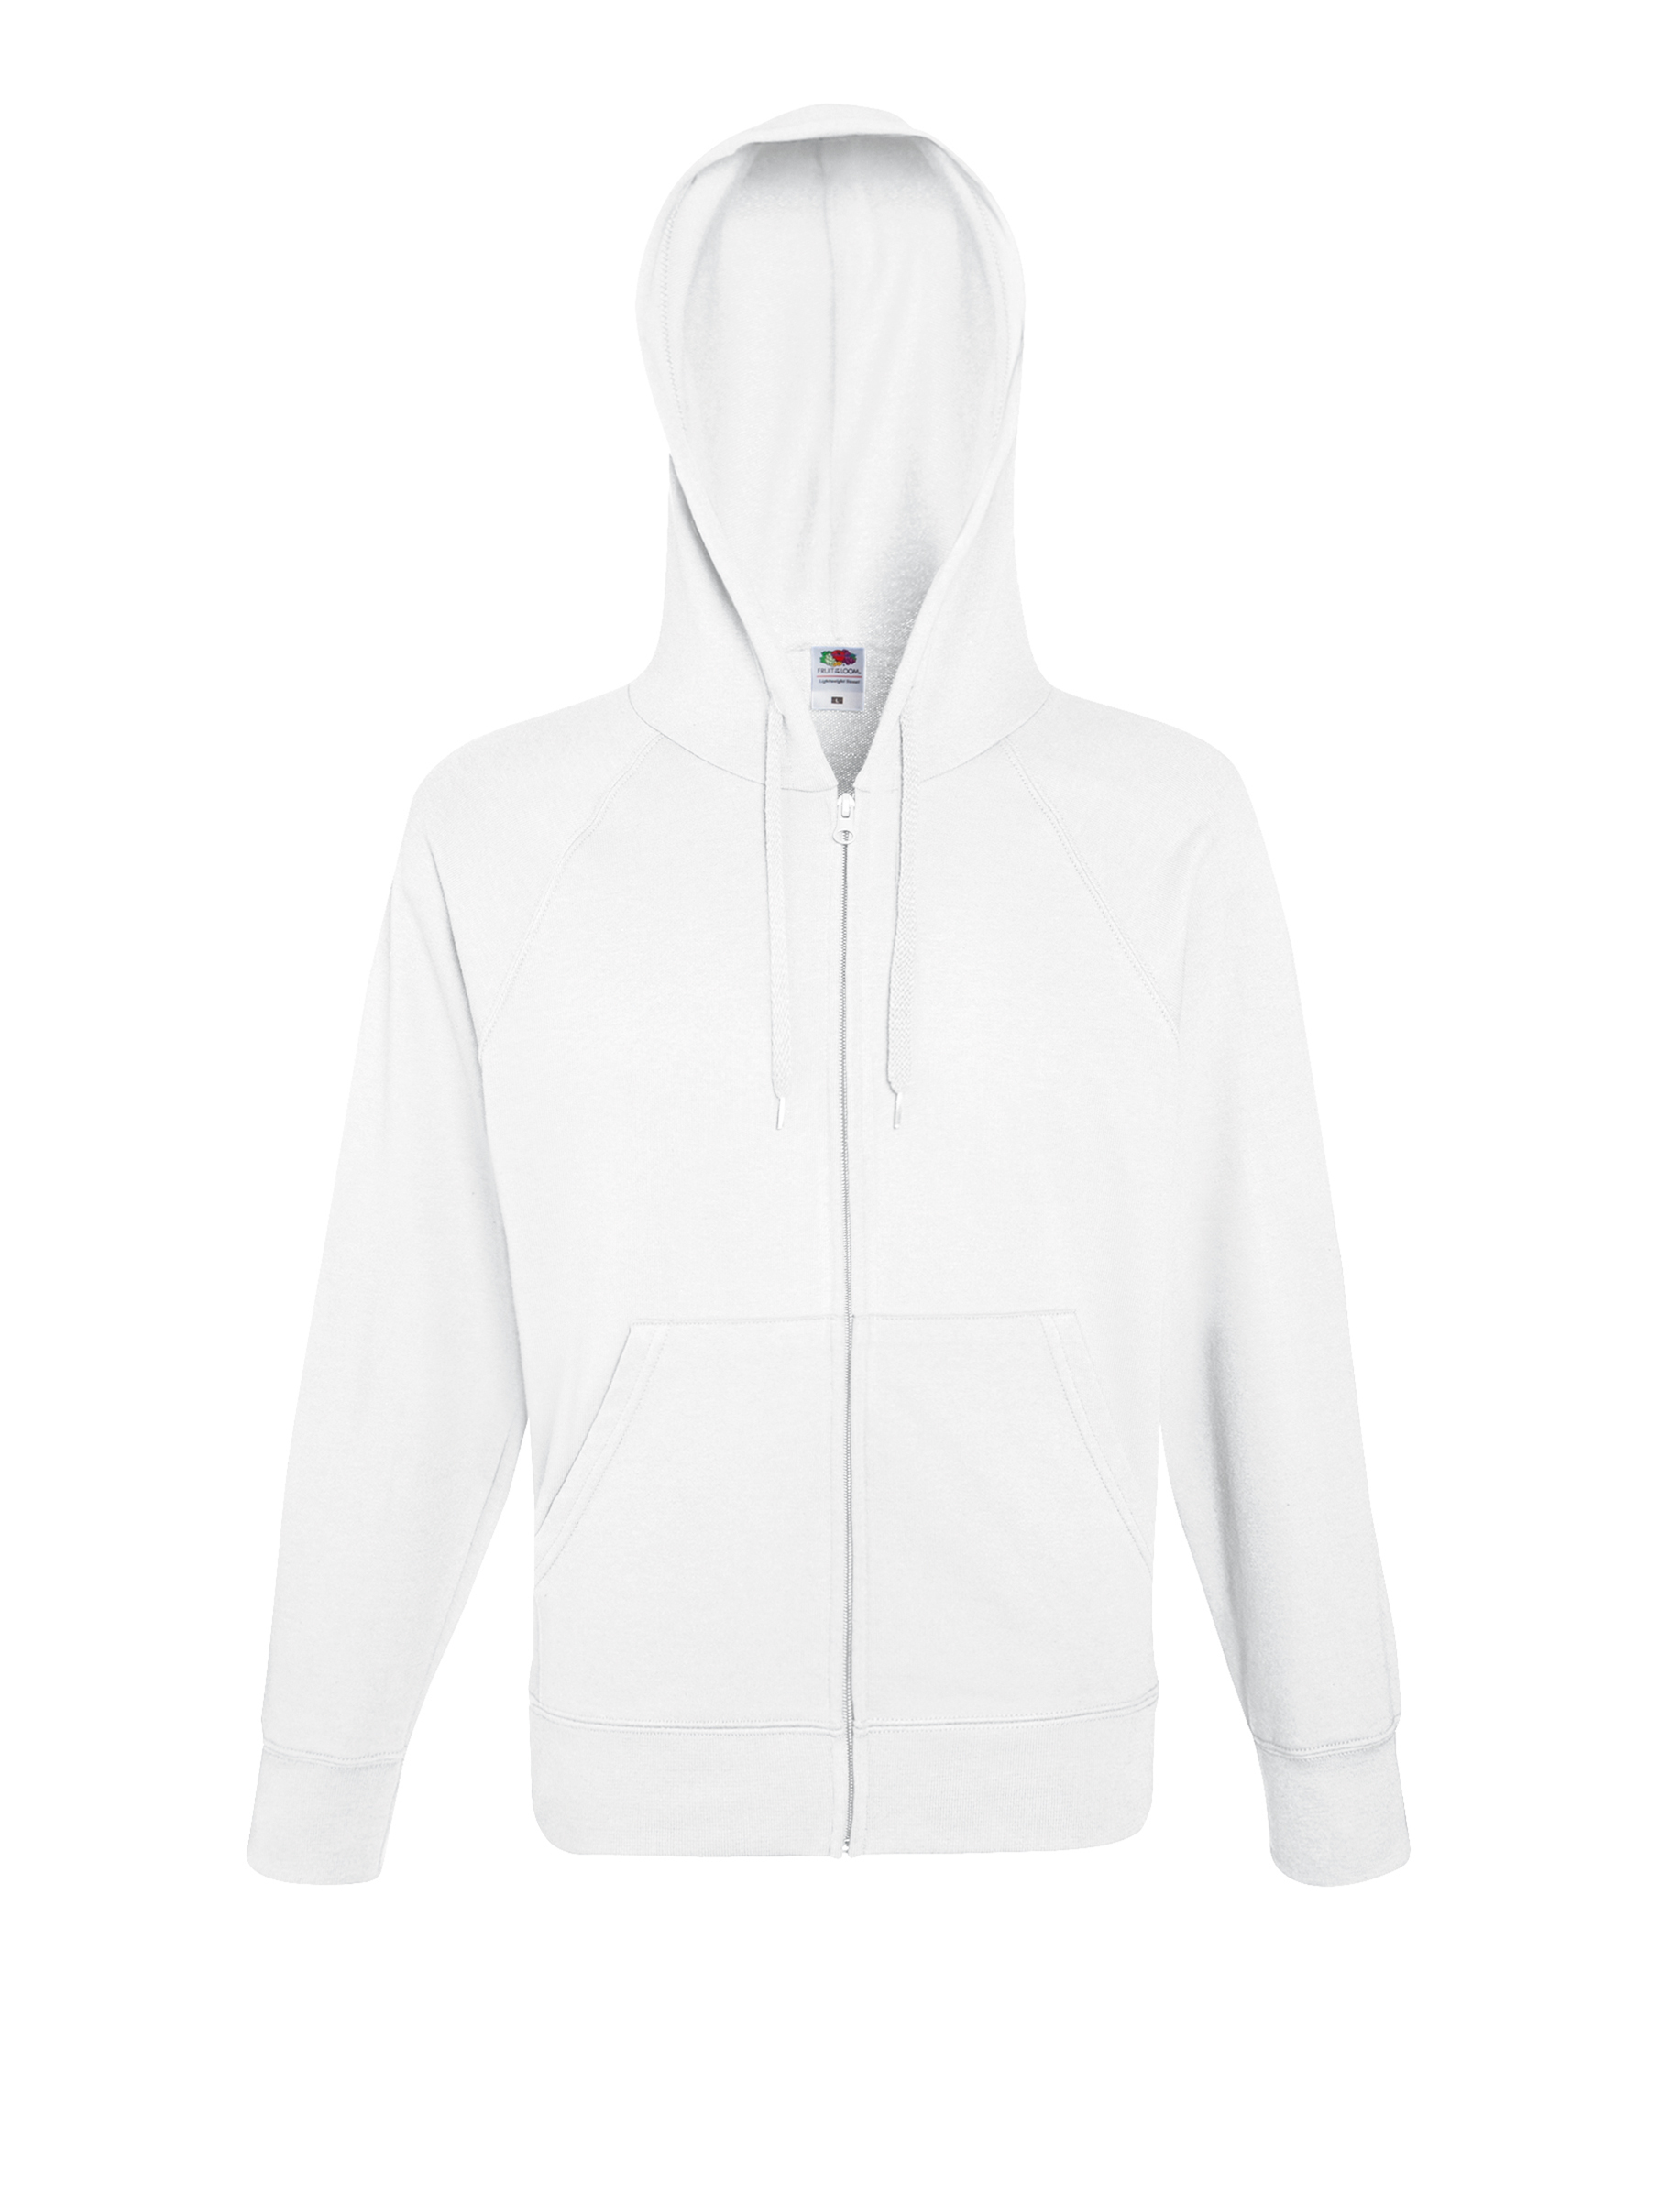 ax-httpswebsystems.s3.amazonaws.comtmp_for_downloadfruit-of-the-loom-lightweight-hooded-sweatshirt-jacket-white.jpeg